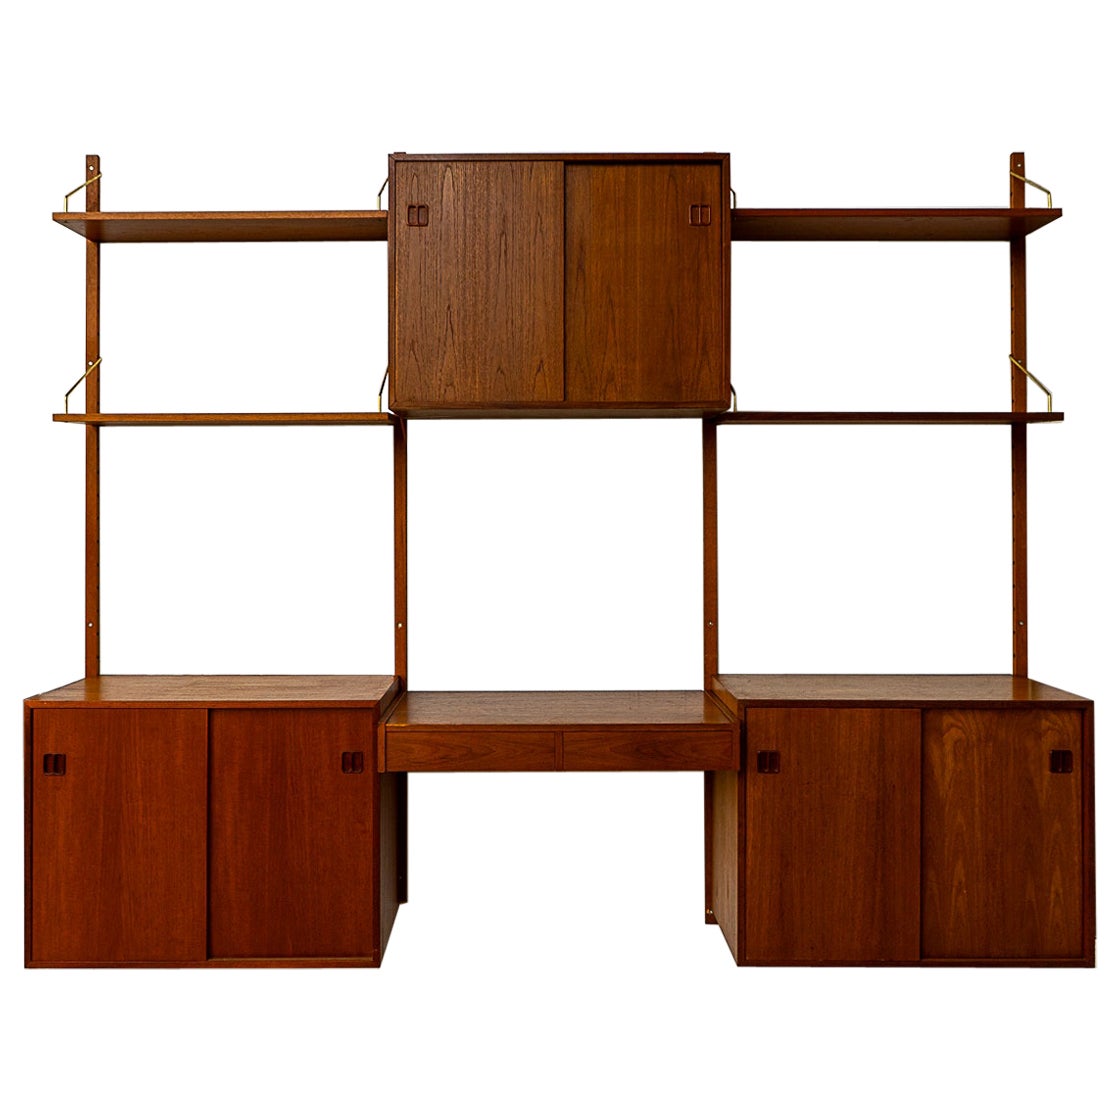 Veneer Shelves and Wall Cabinets